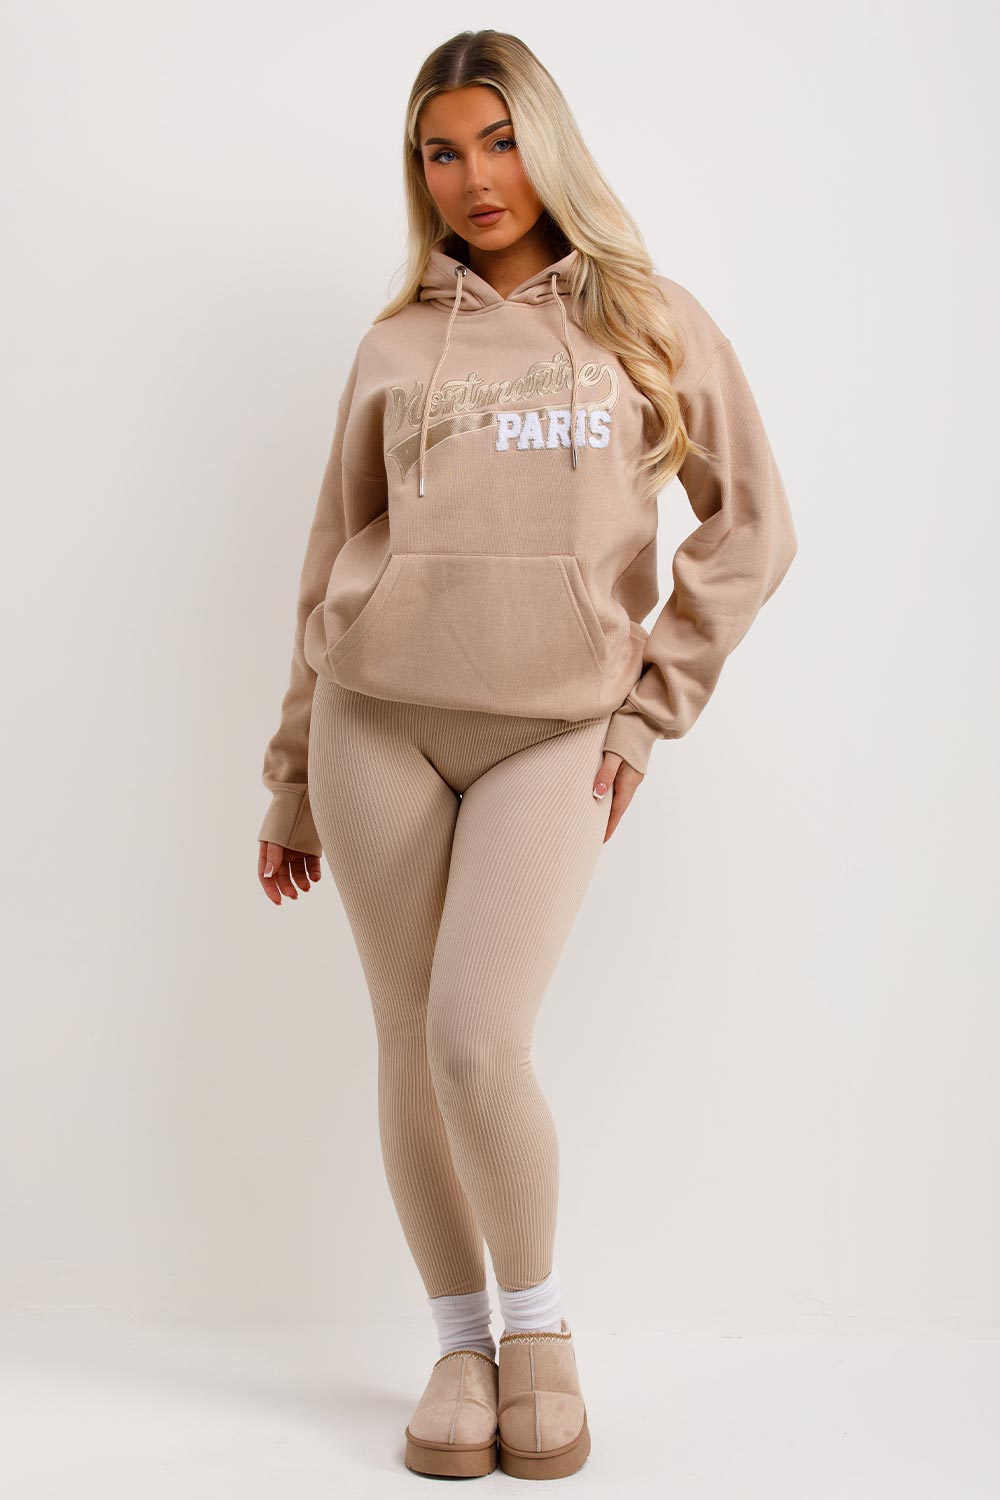 montmartre paris embroidery hoodie womens